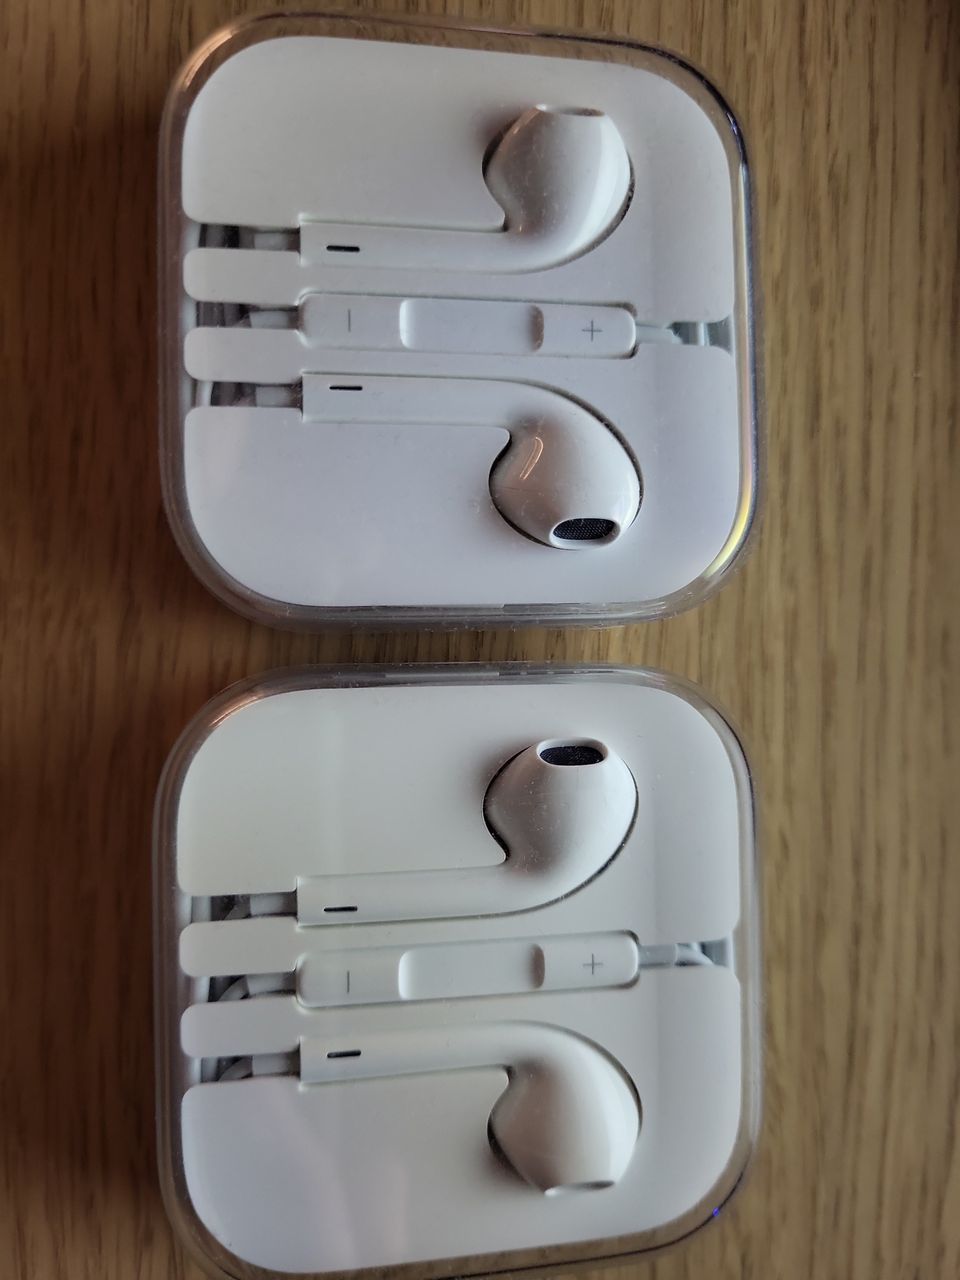 Apple Earbuds